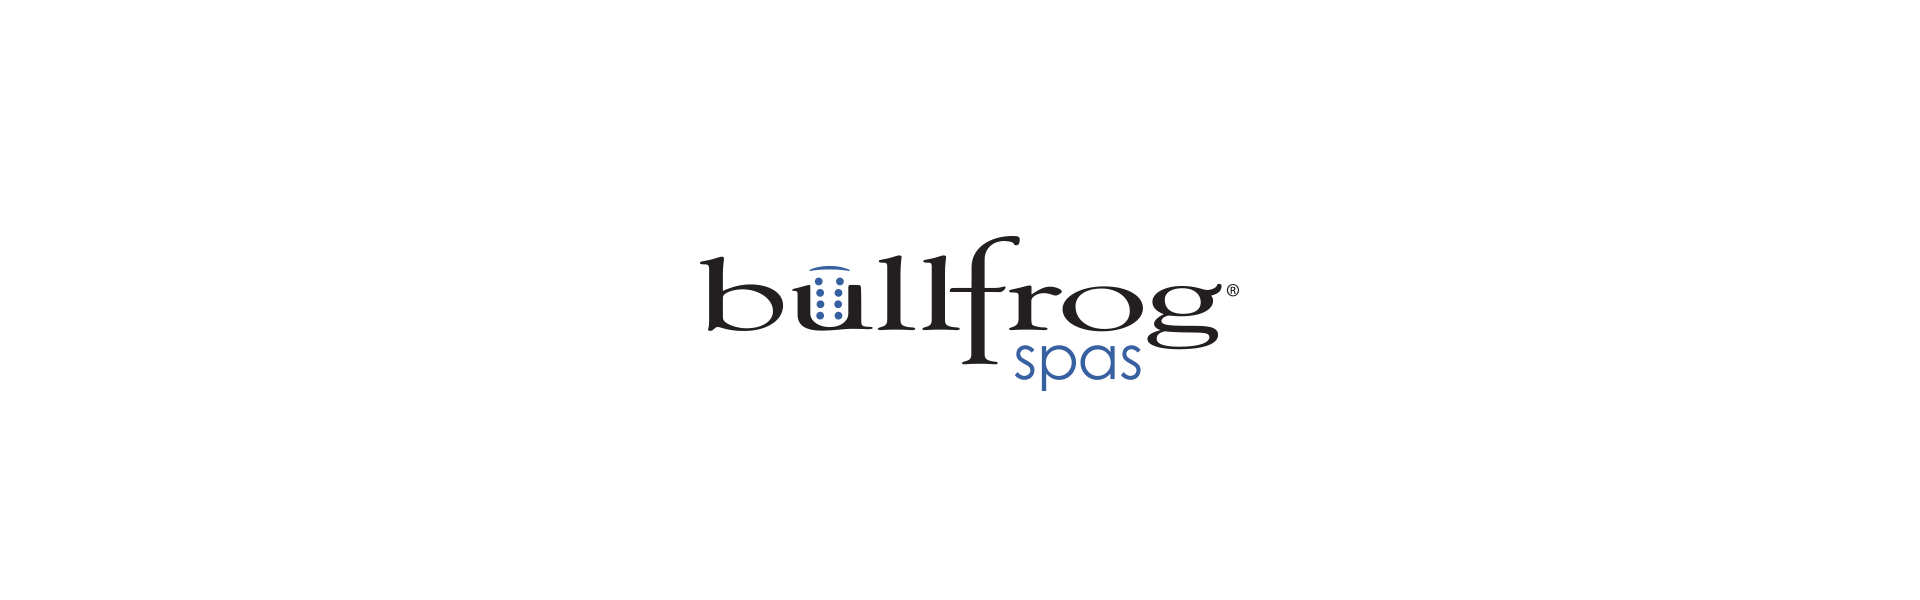 bullfrog-title-logo